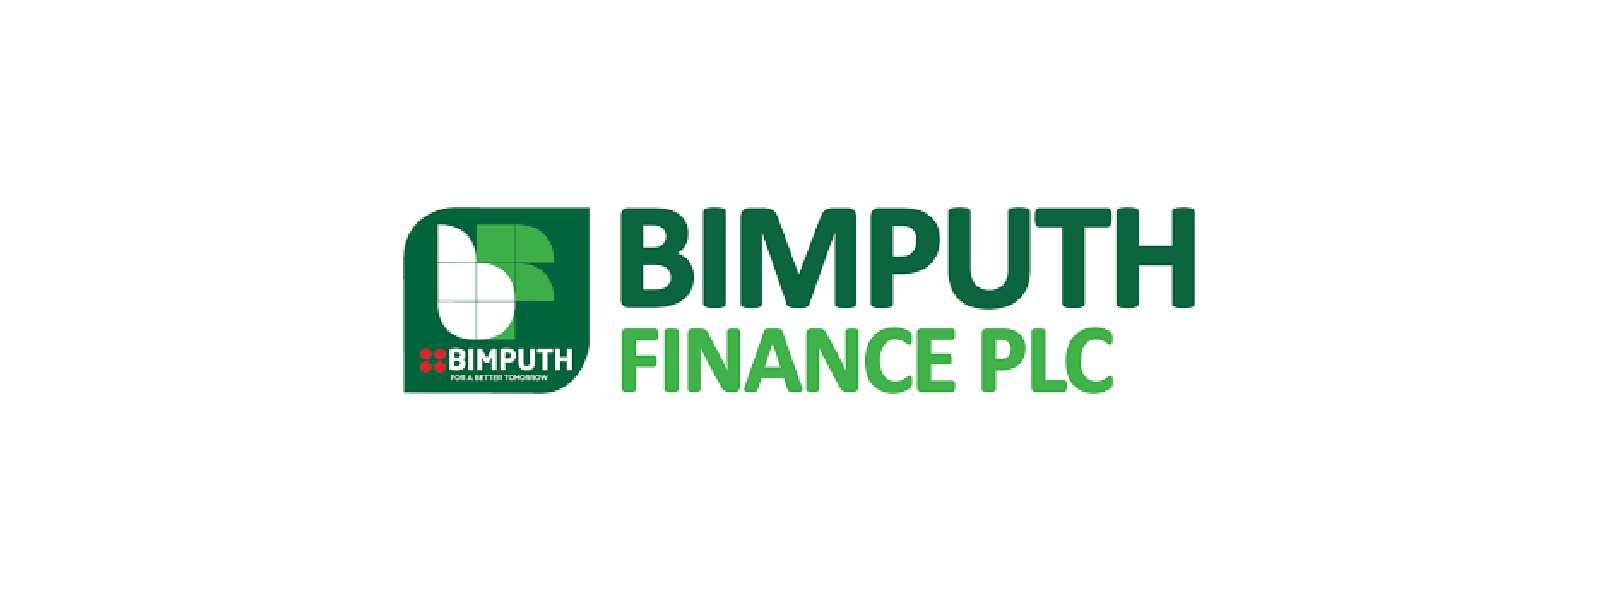 CBSL cancels license of Bimputh Finance PLC